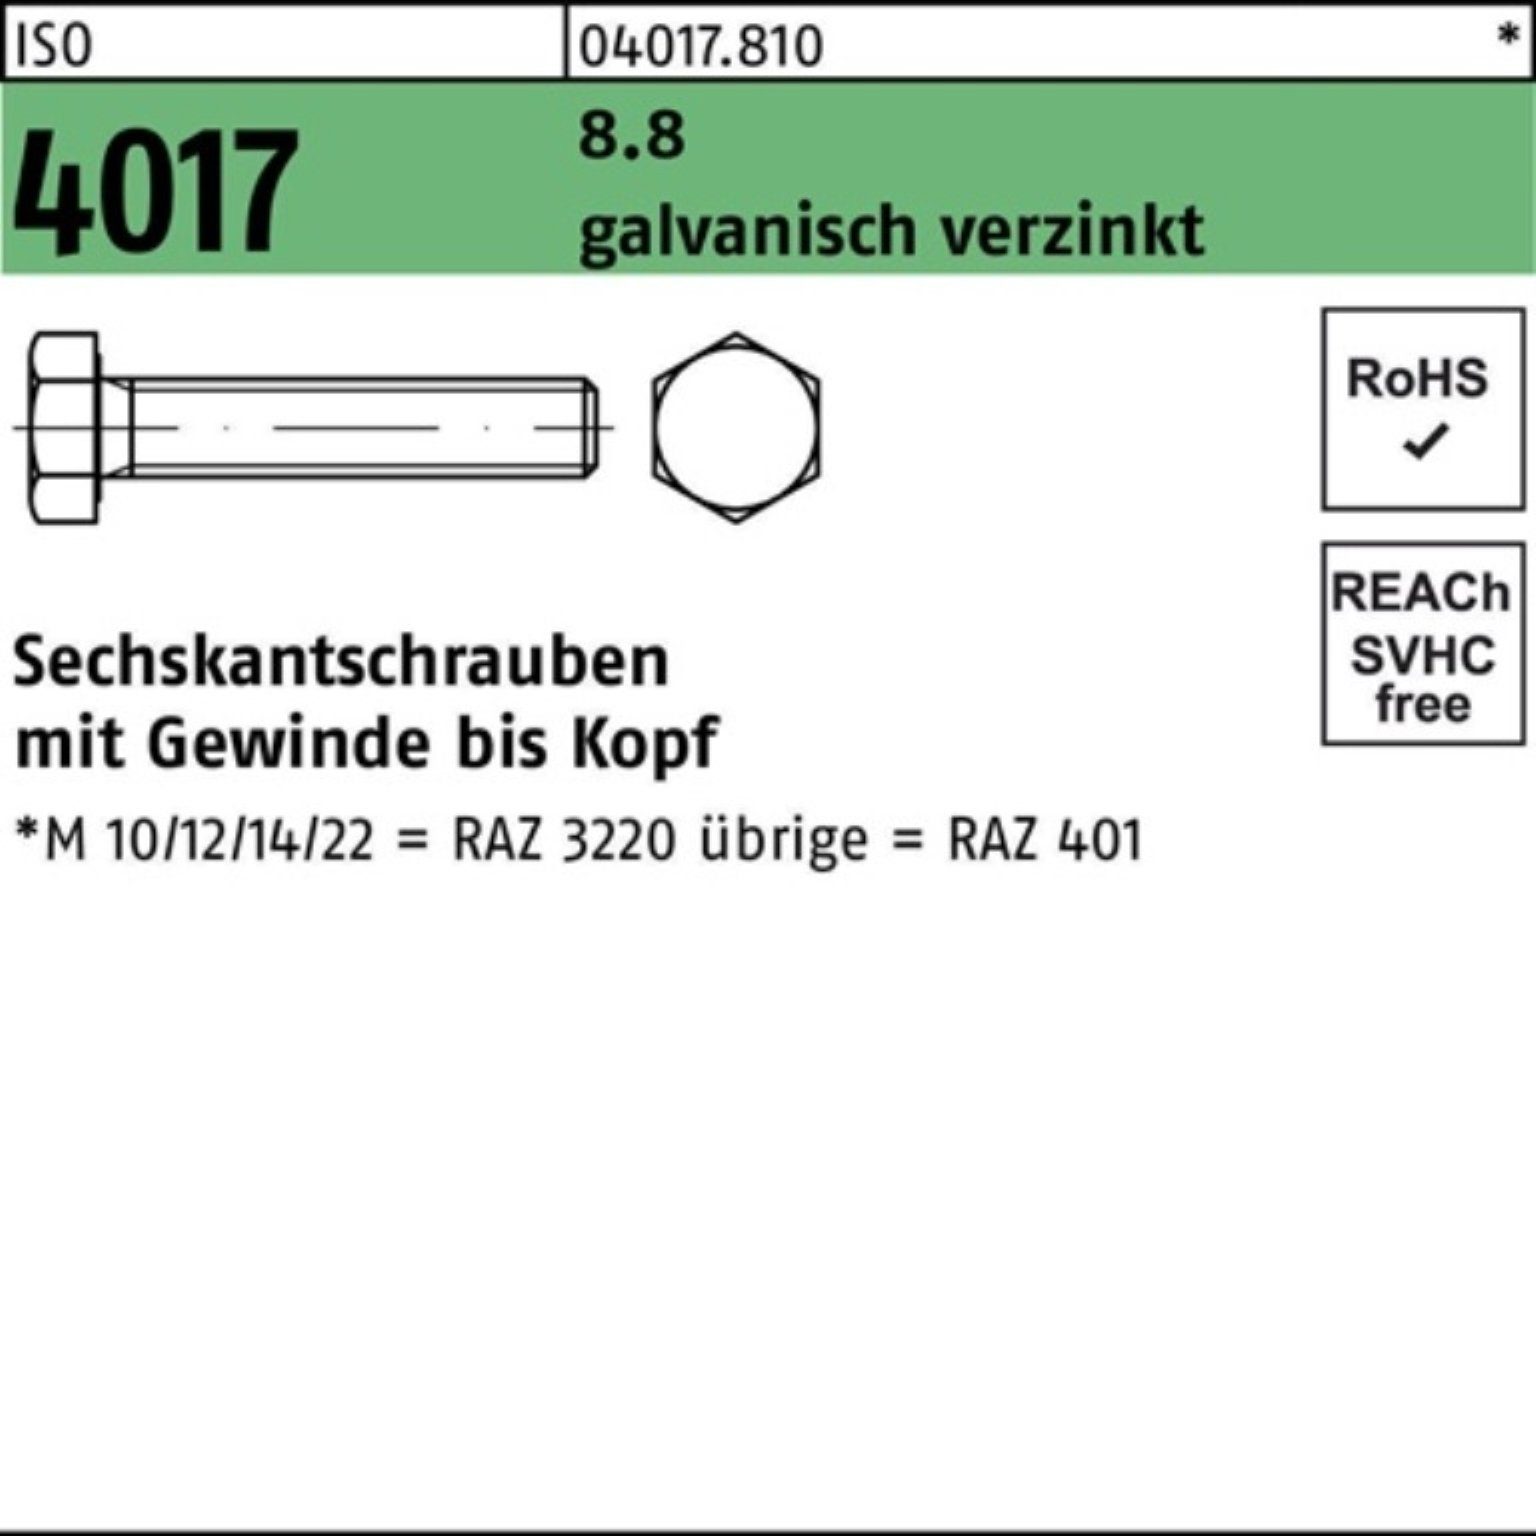 galv.verz. VG Sechskantschraube 4017 St M36x Bufab Sechskantschraube 100 Pack 1 ISO 100er 8.8